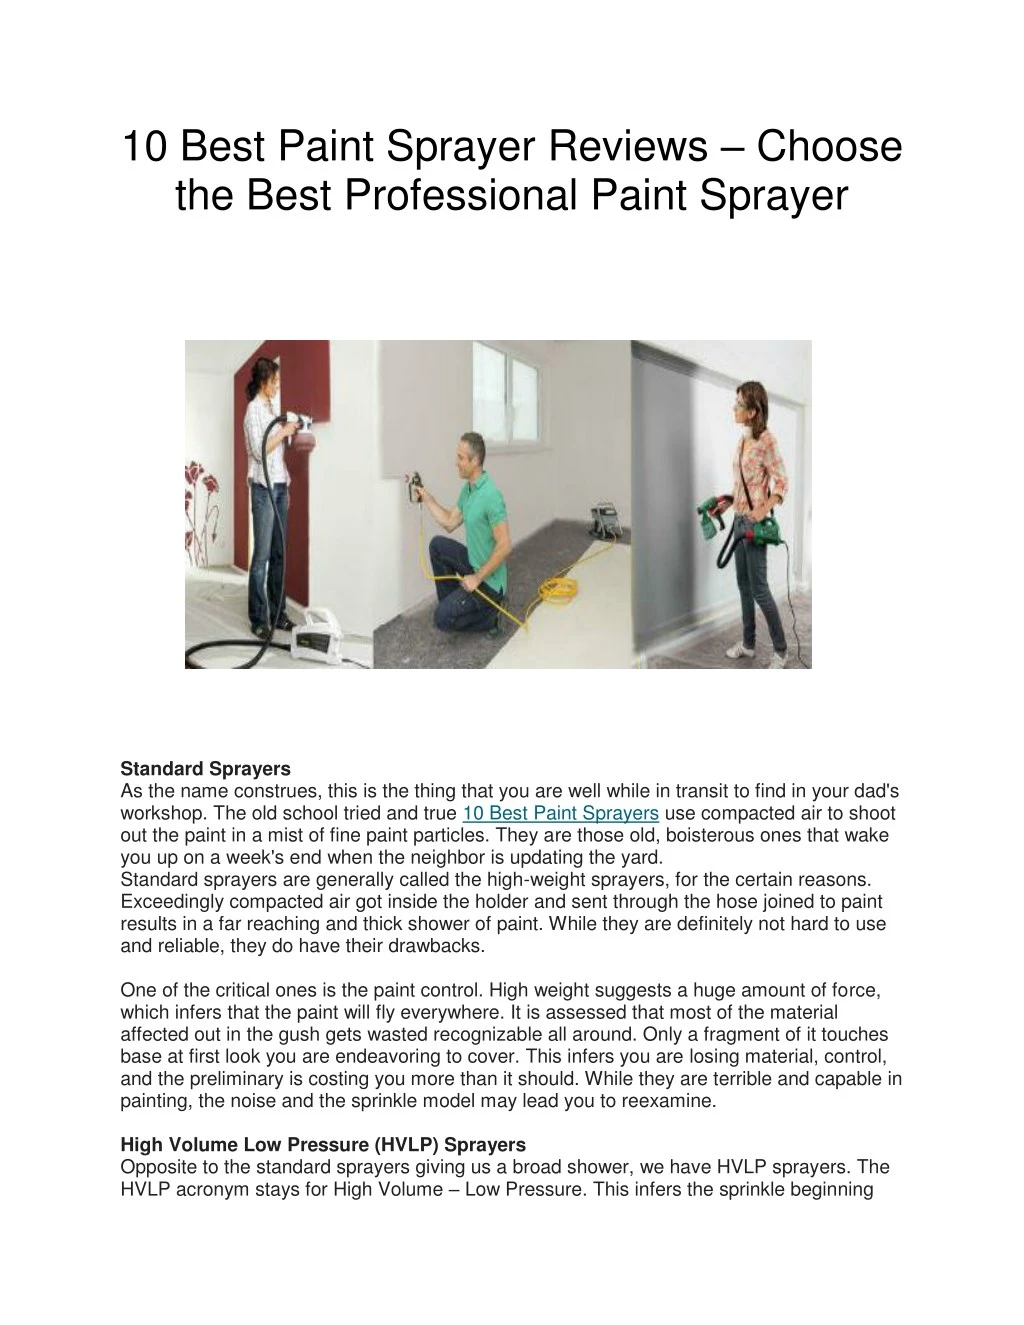 10 best paint sprayer reviews choose the best